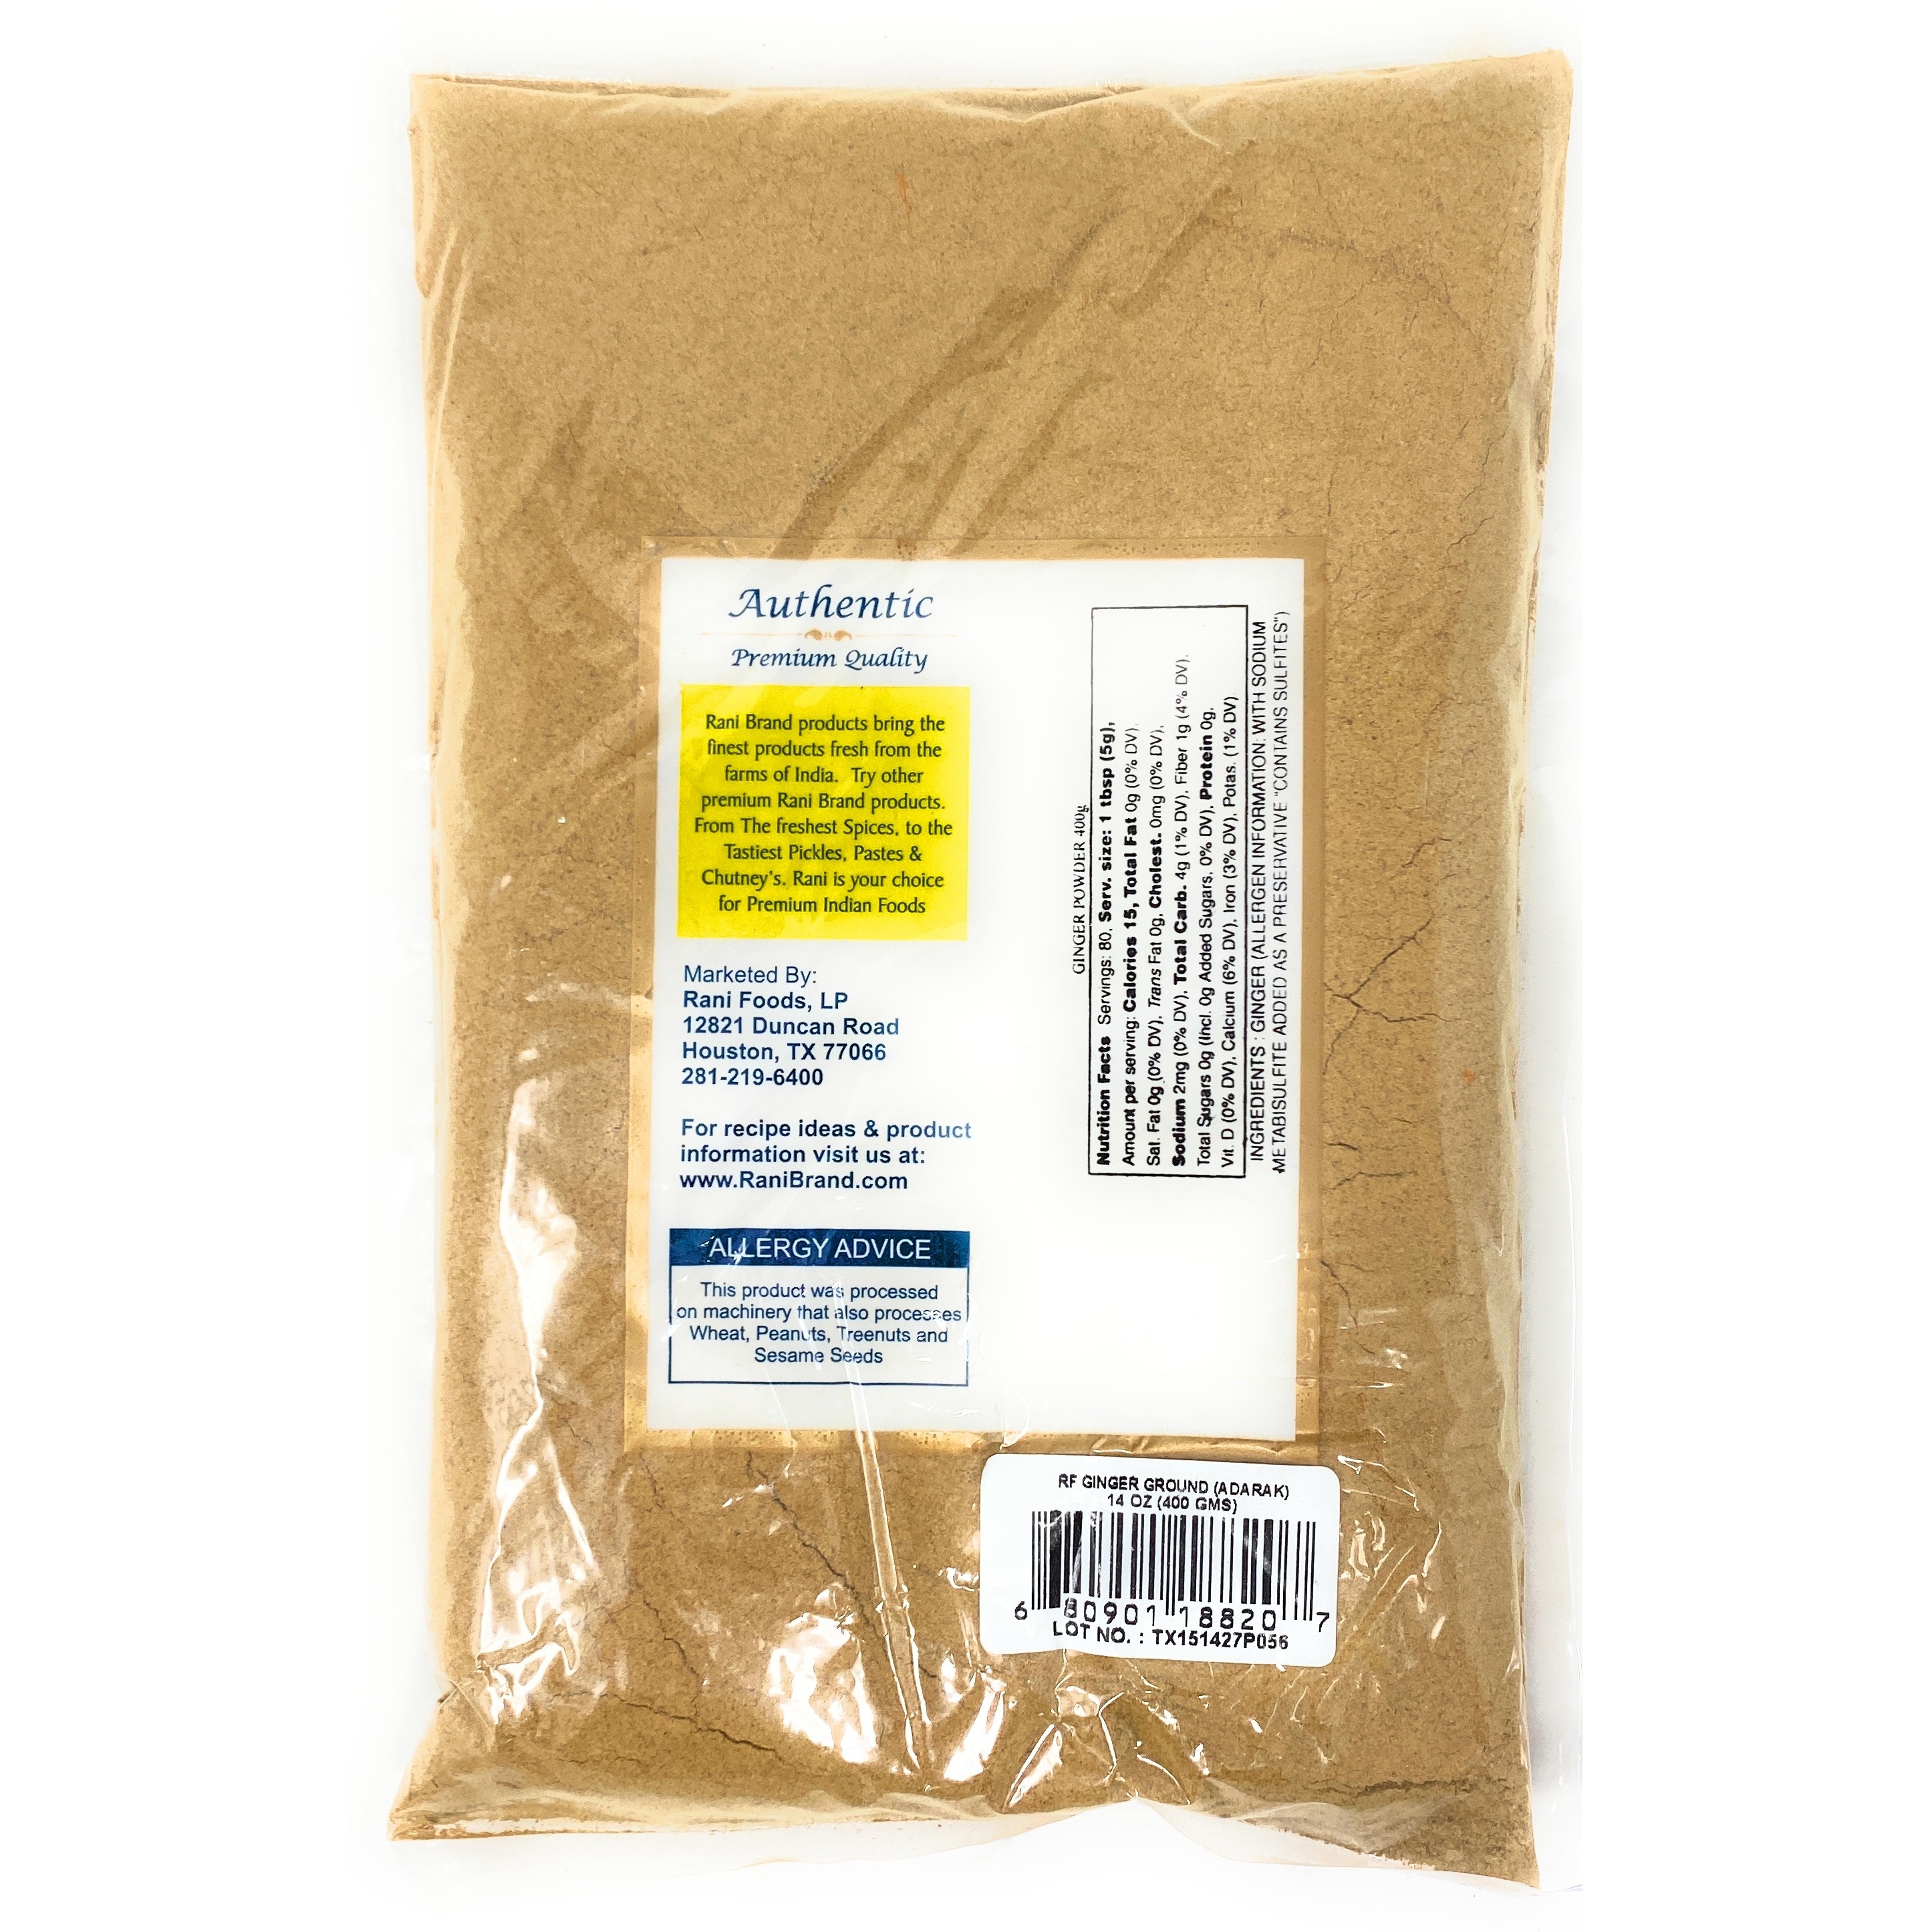 Rani Ginger (Adarak) Powder Ground, Spice 14oz (400g) ~ Natural | Vegan | Gluten Free Ingredients | NON-GMO | Indian Origin